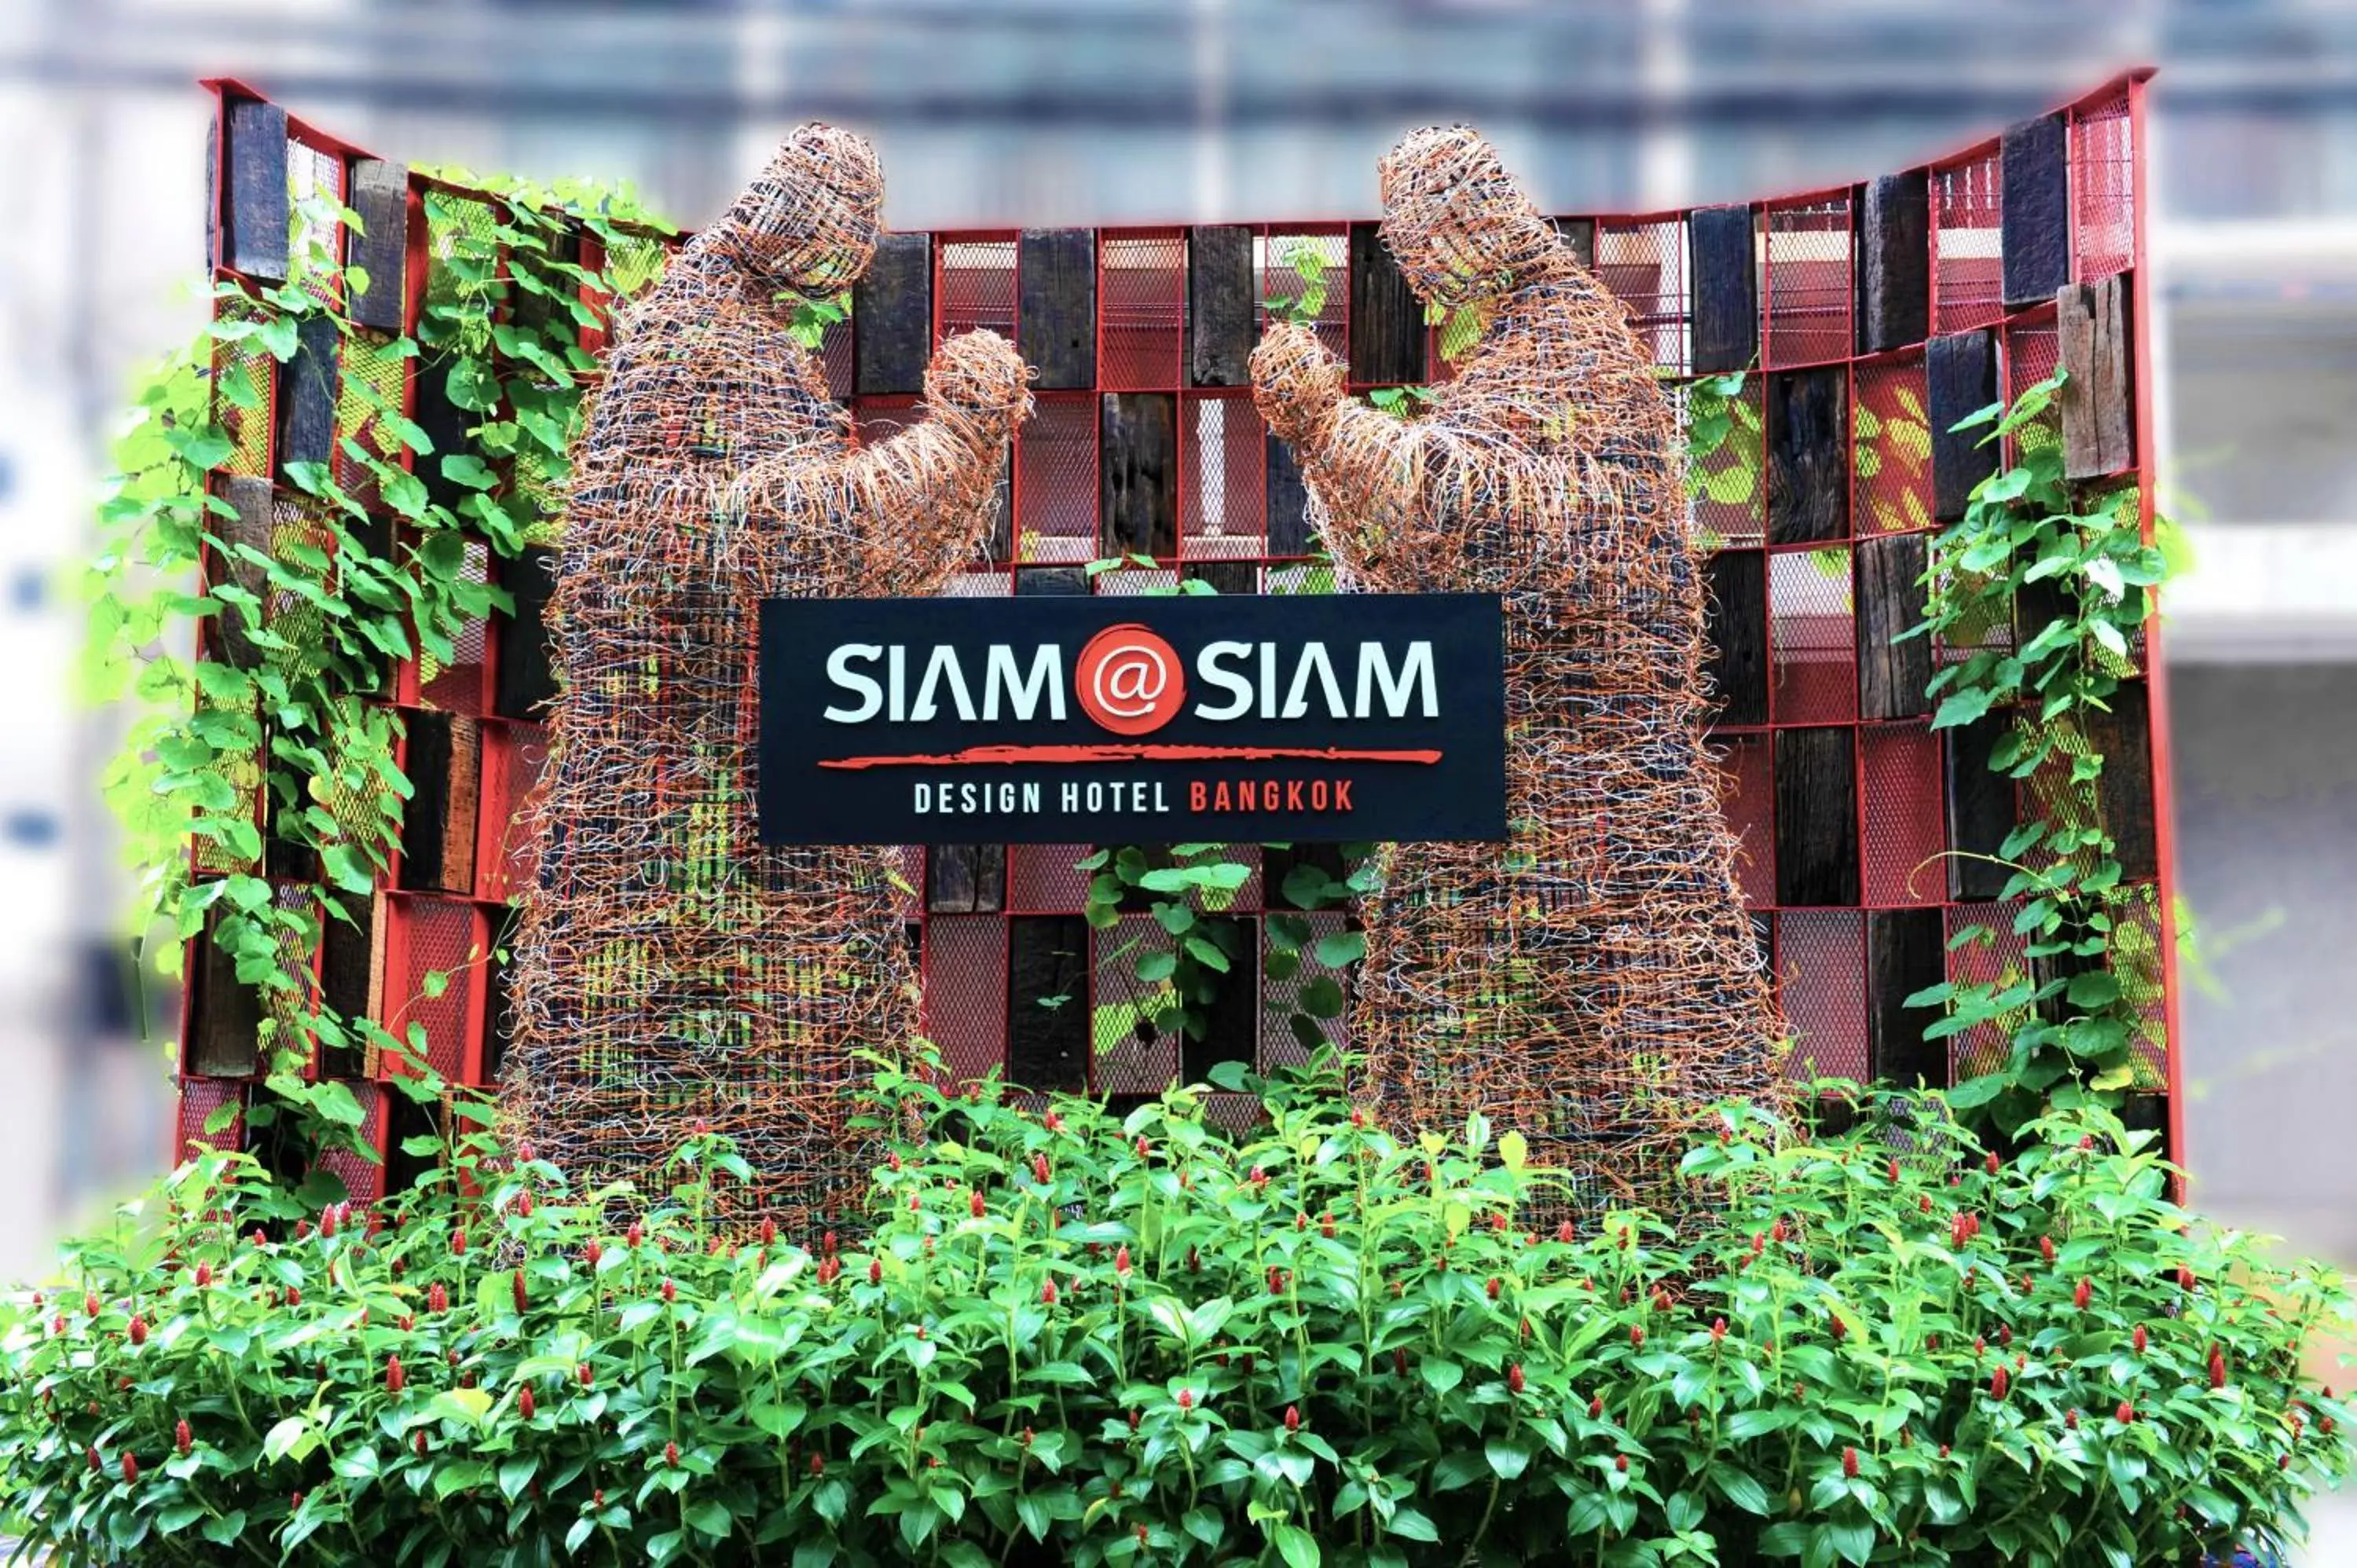 Decorative detail in Siam@Siam, Design Hotel Bangkok